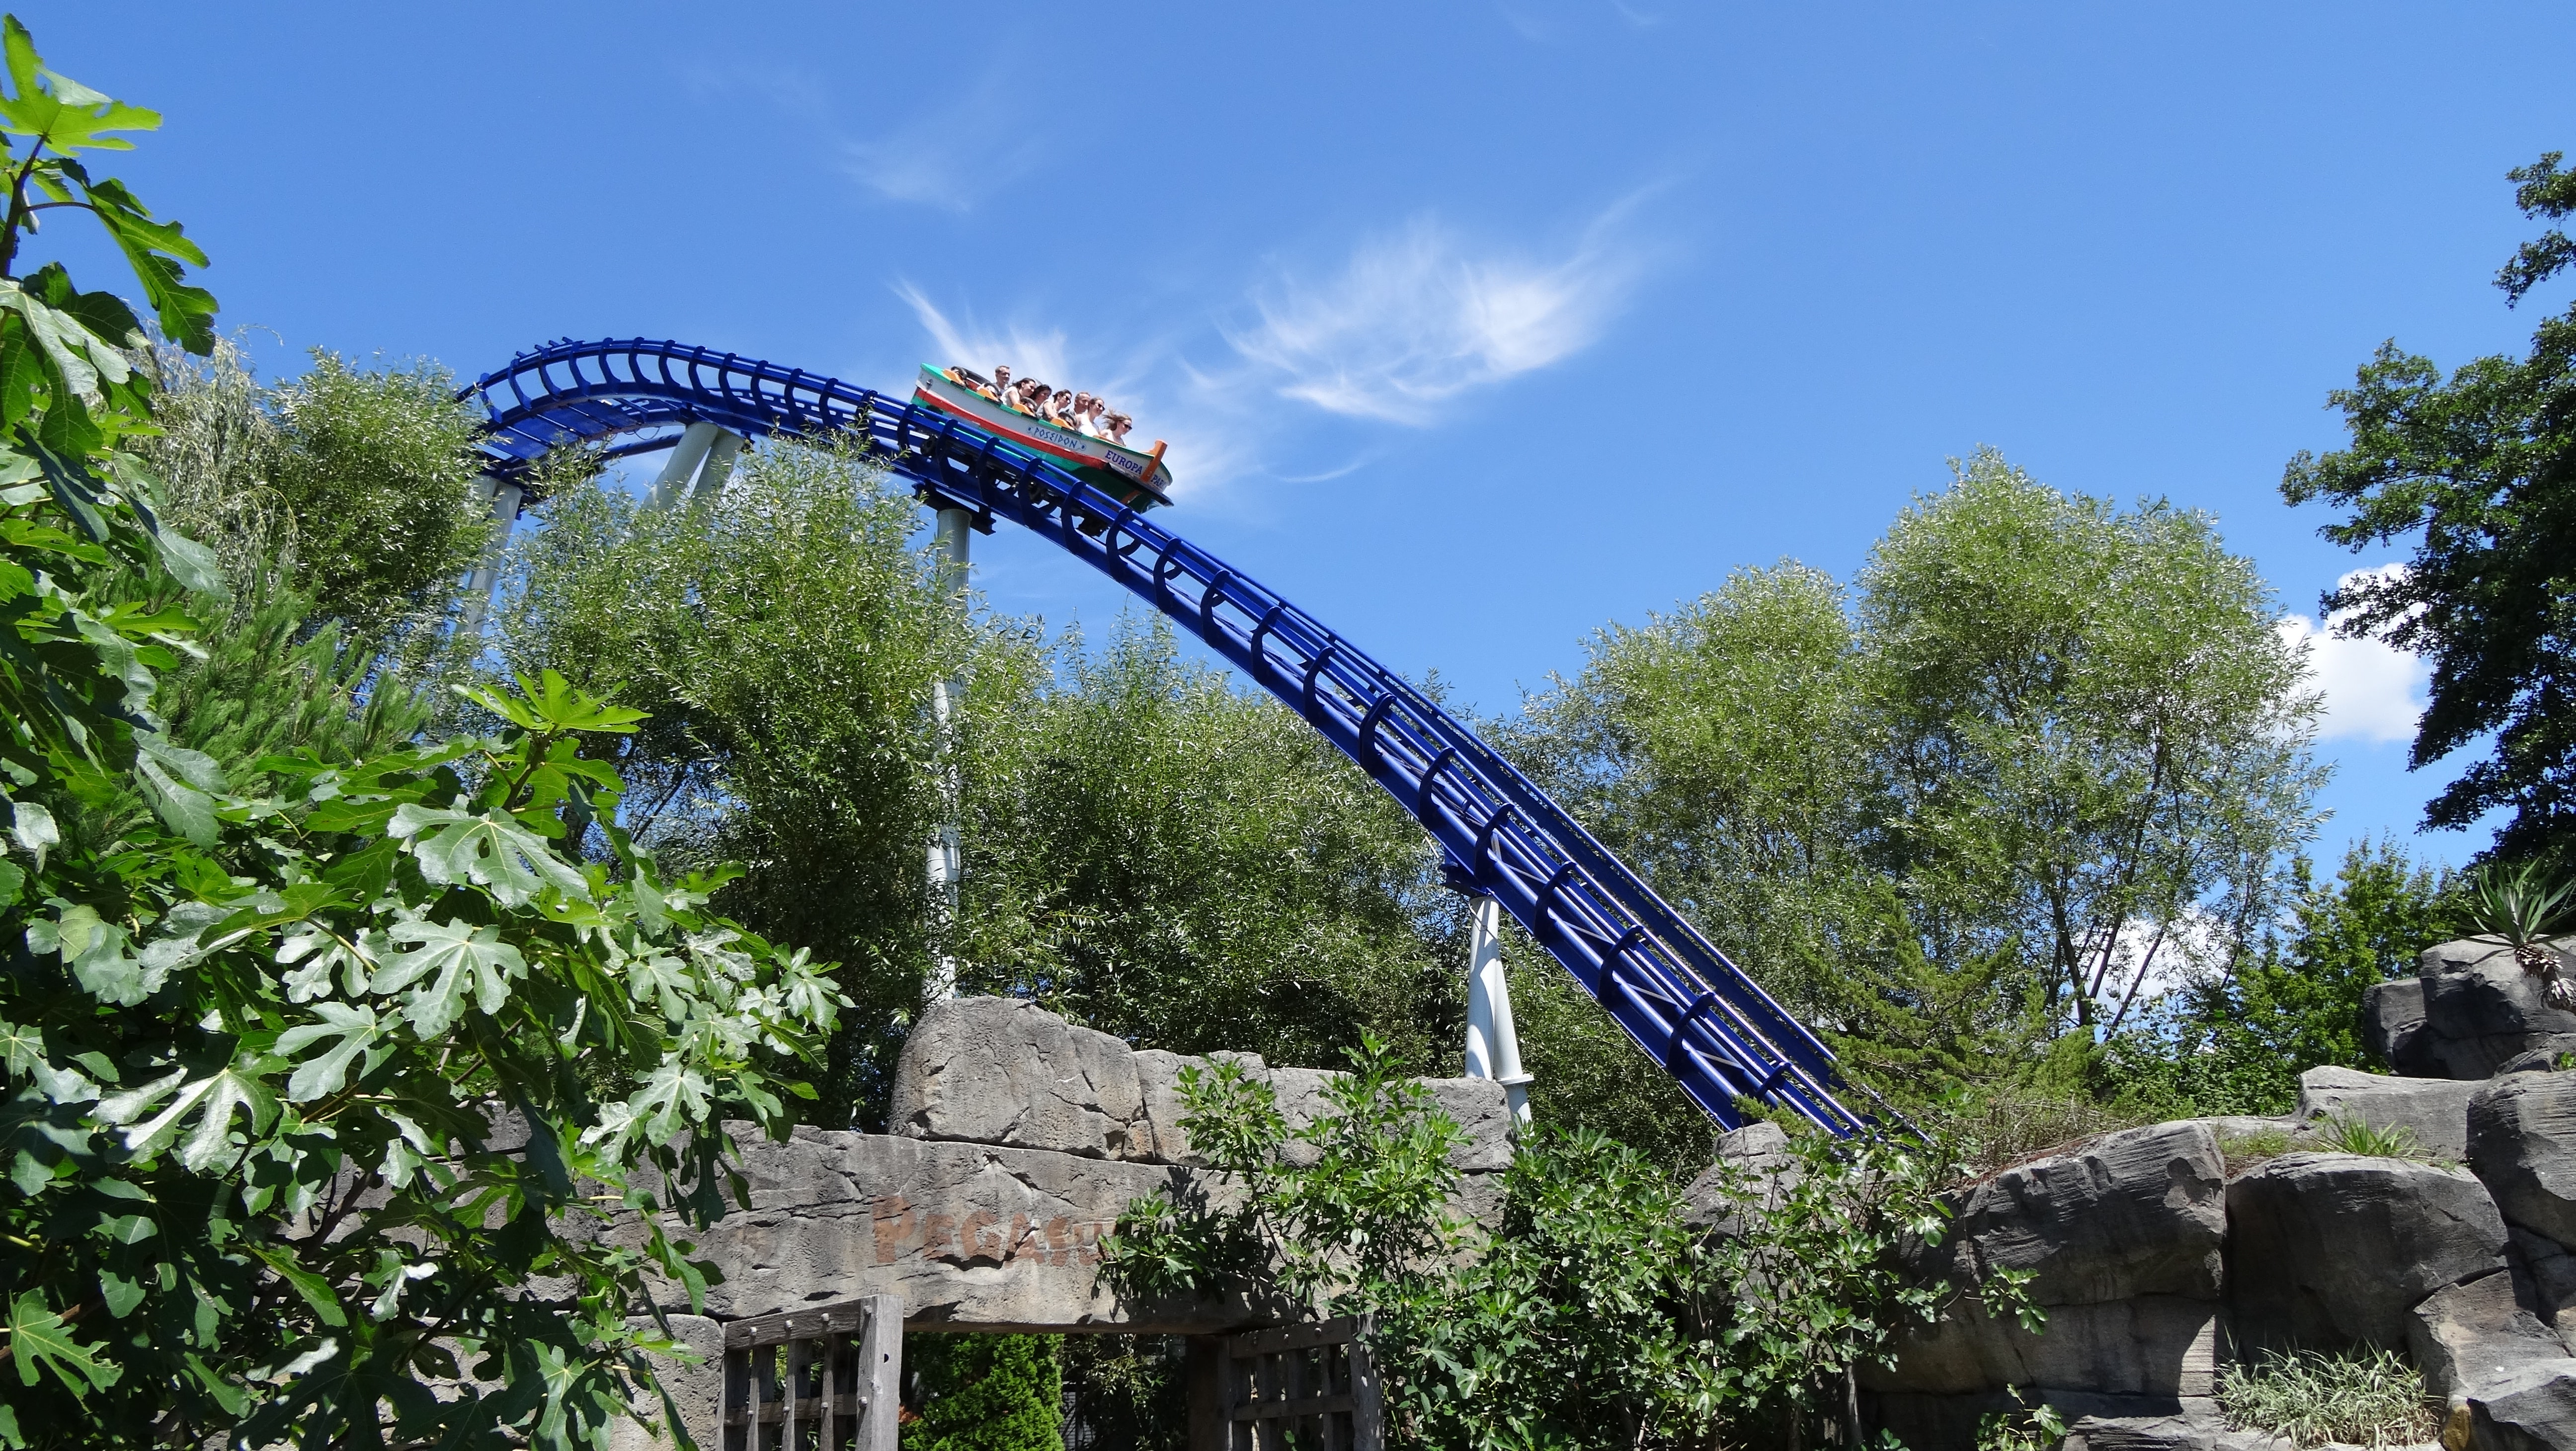 A roller coaster at Europapark against a blue sky.